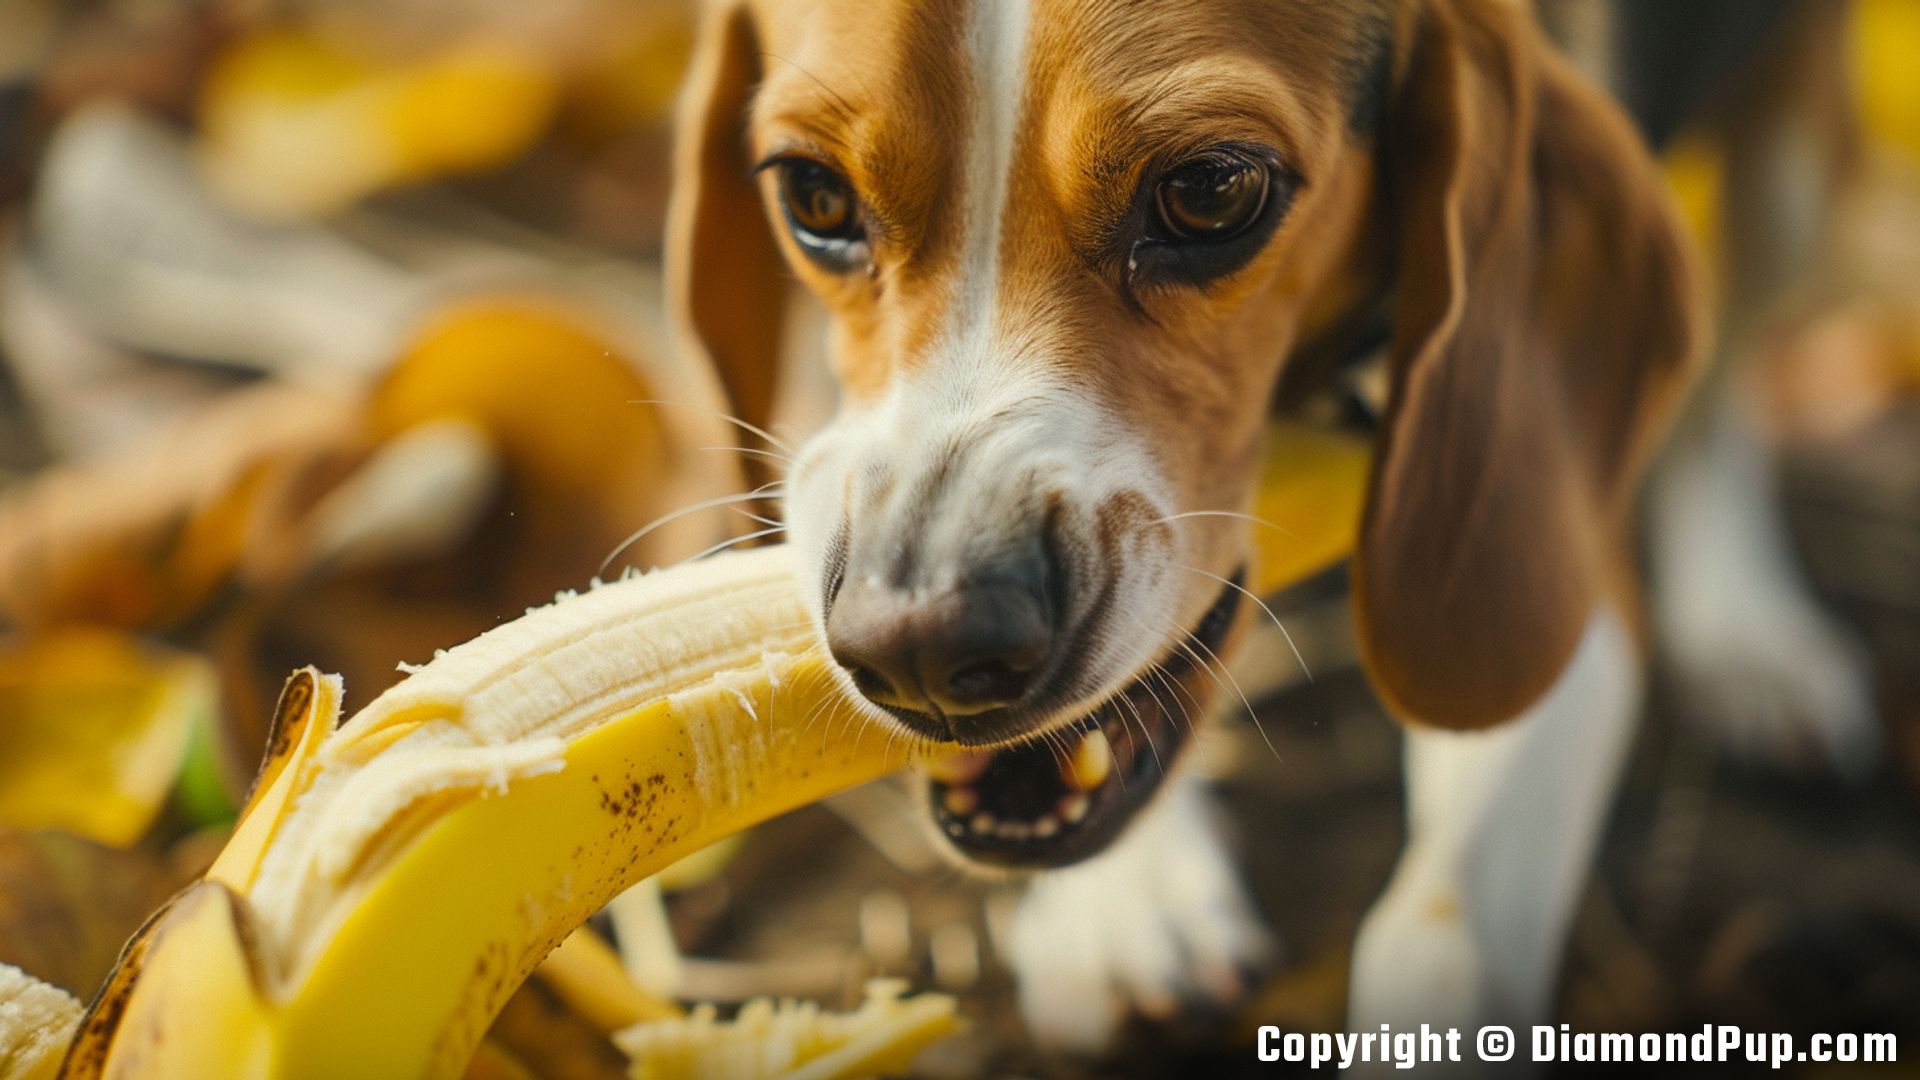 Photo of an Adorable Beagle Snacking on Banana